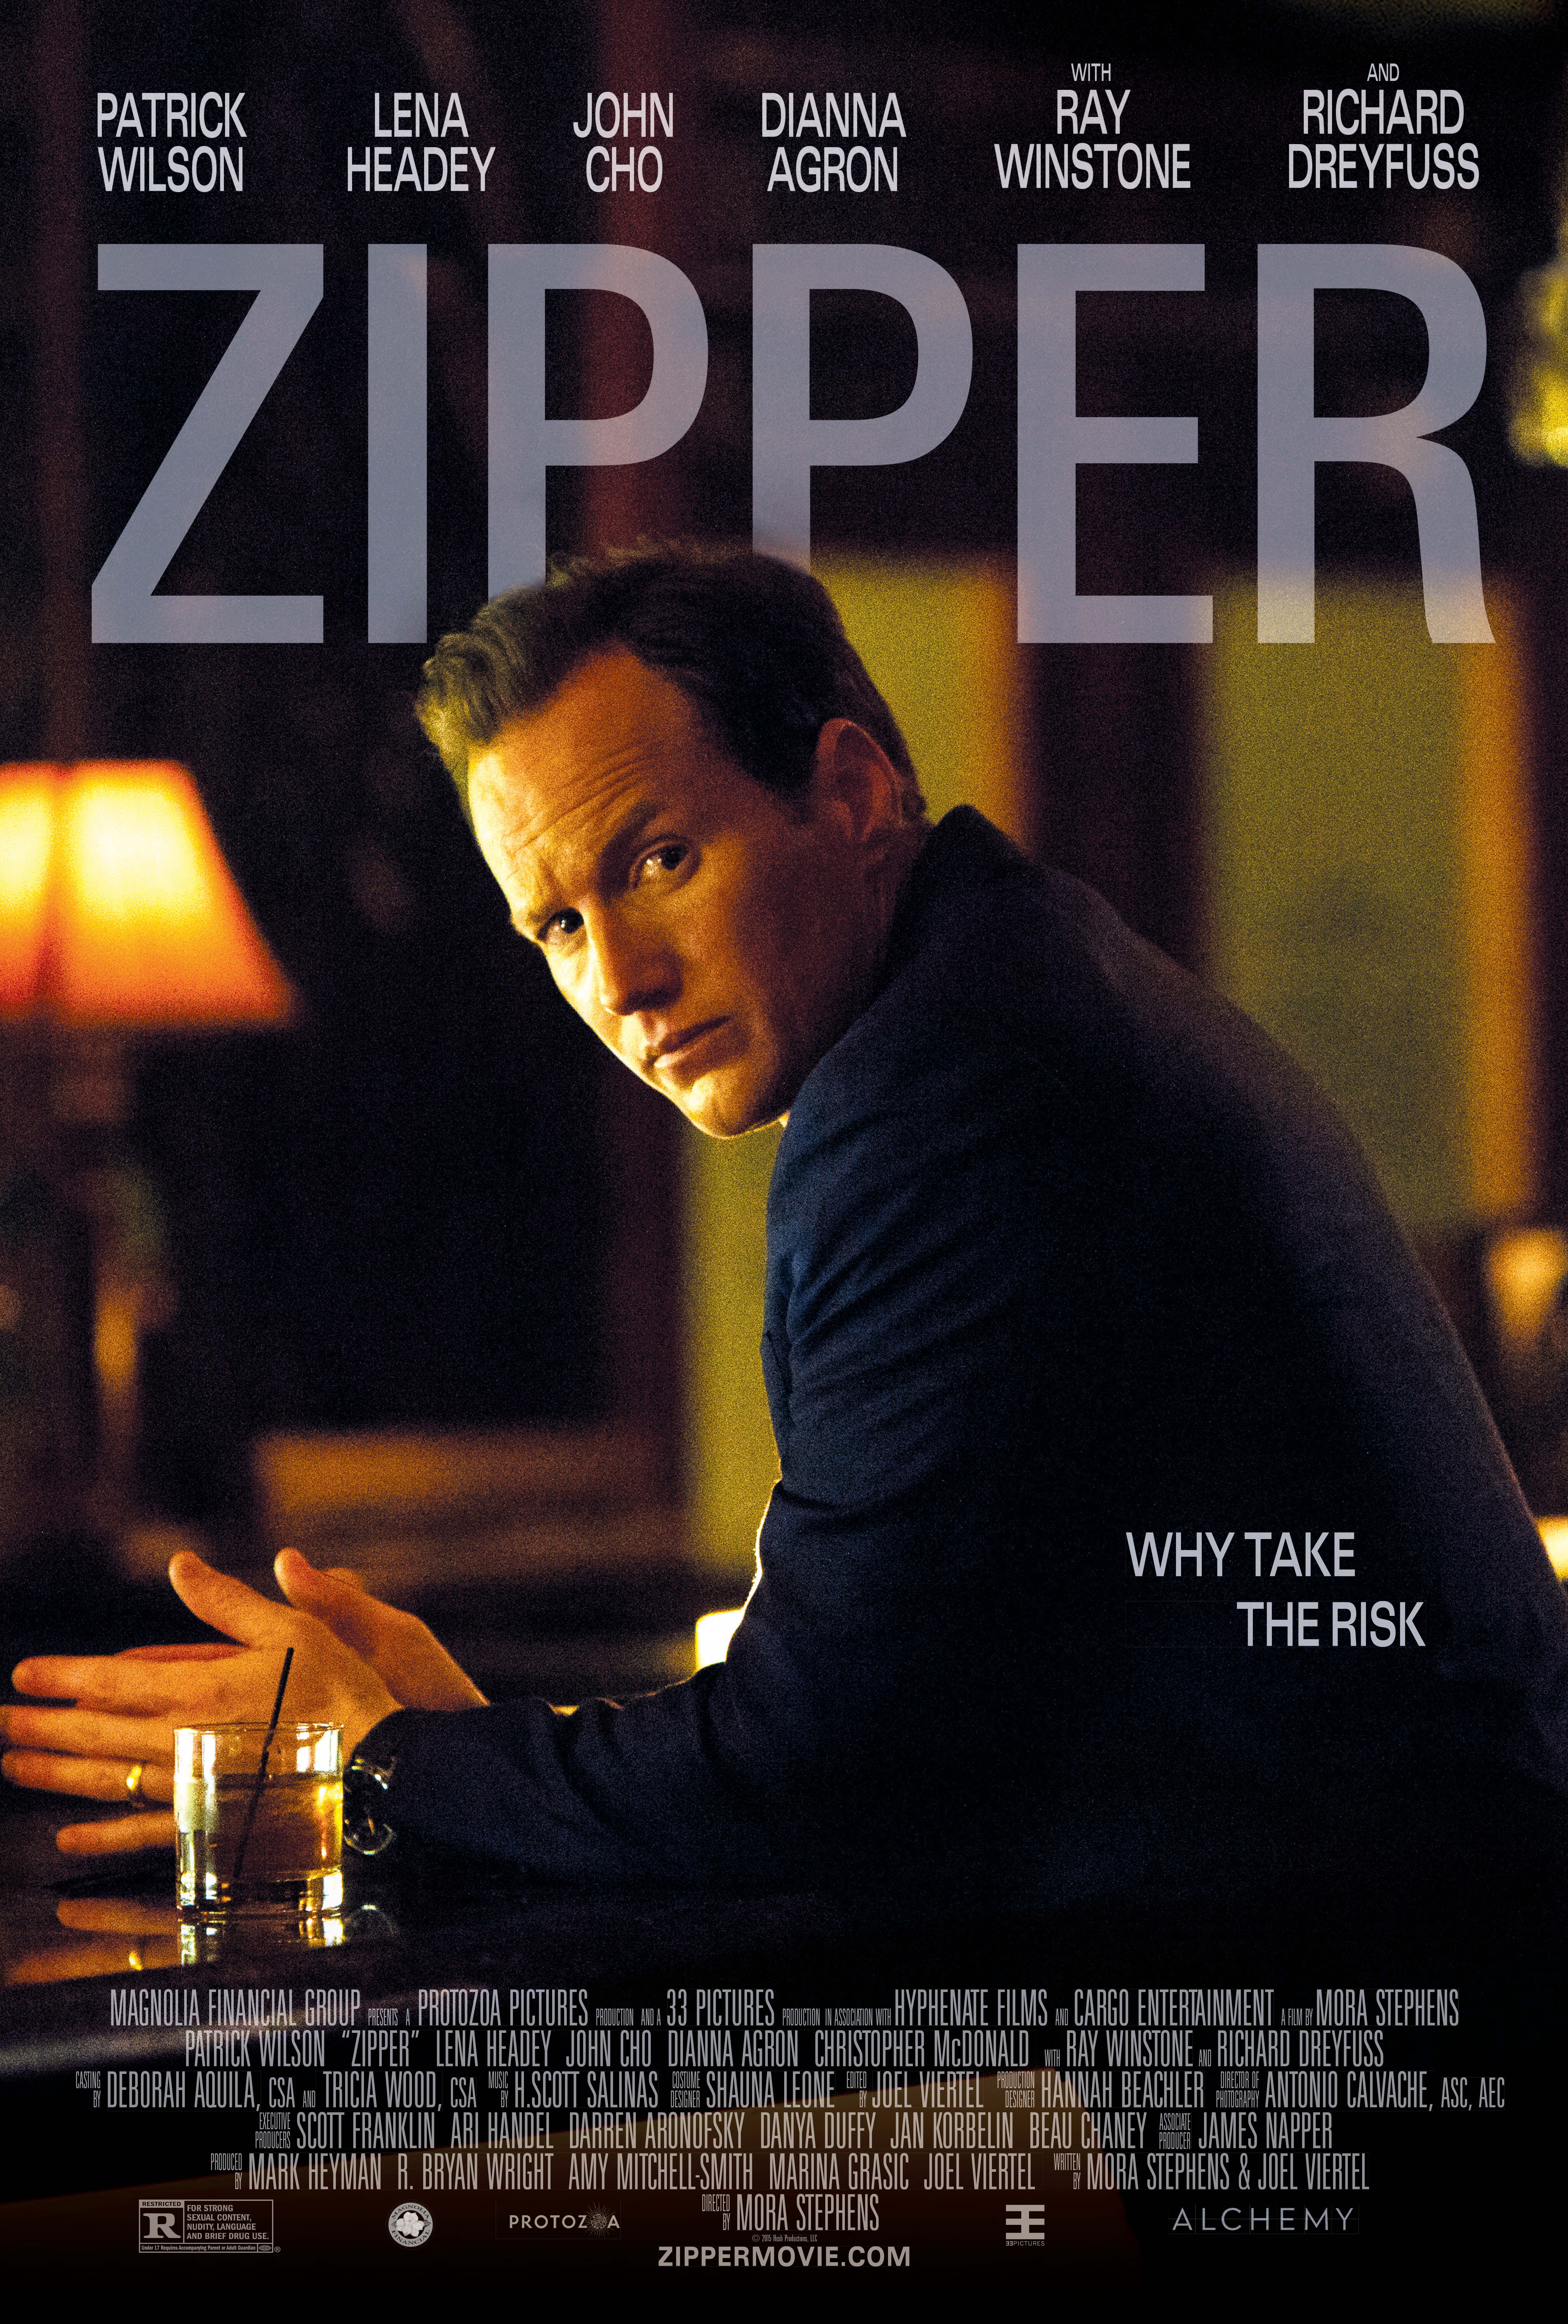 Patrick Wilson in Zipper (2015)